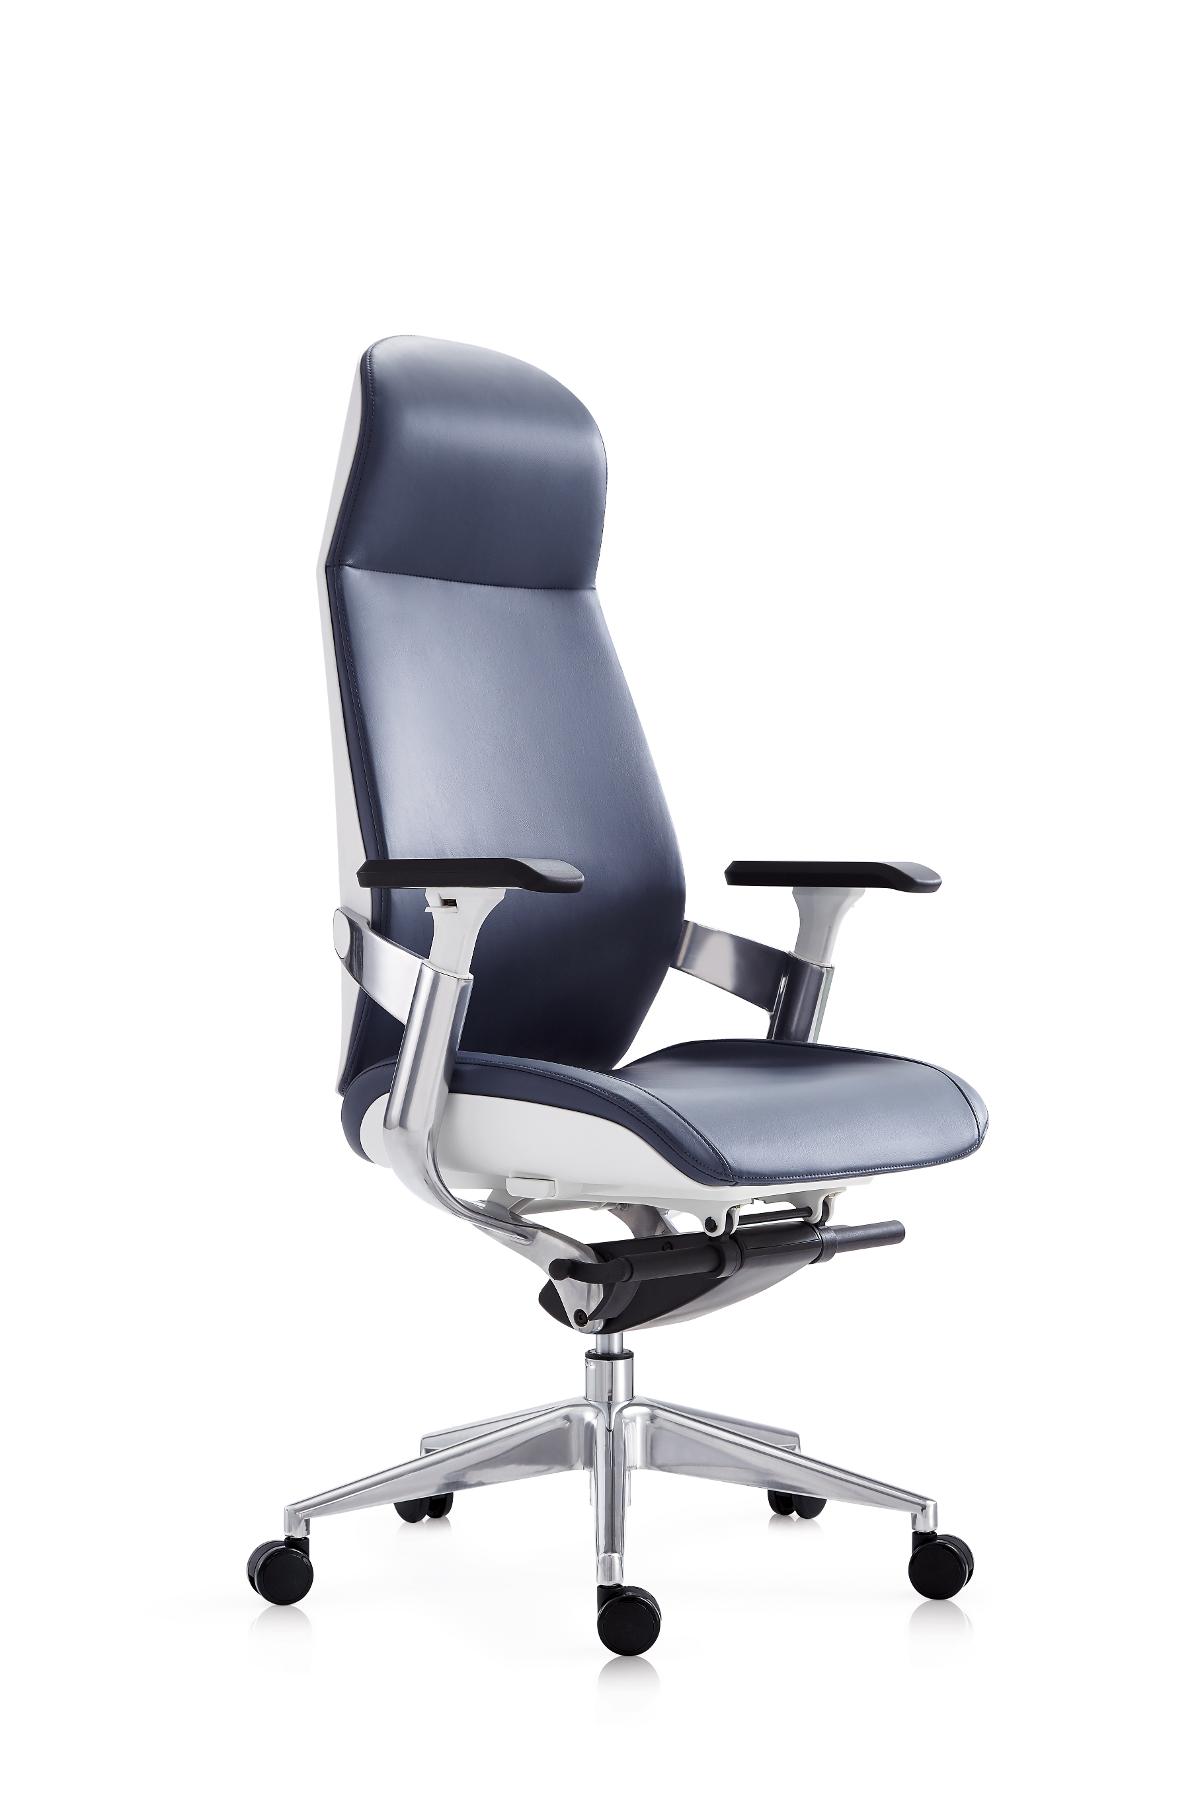 Super Chair เก้าอี้ผู้บริหาร รุ่น 003-2 White